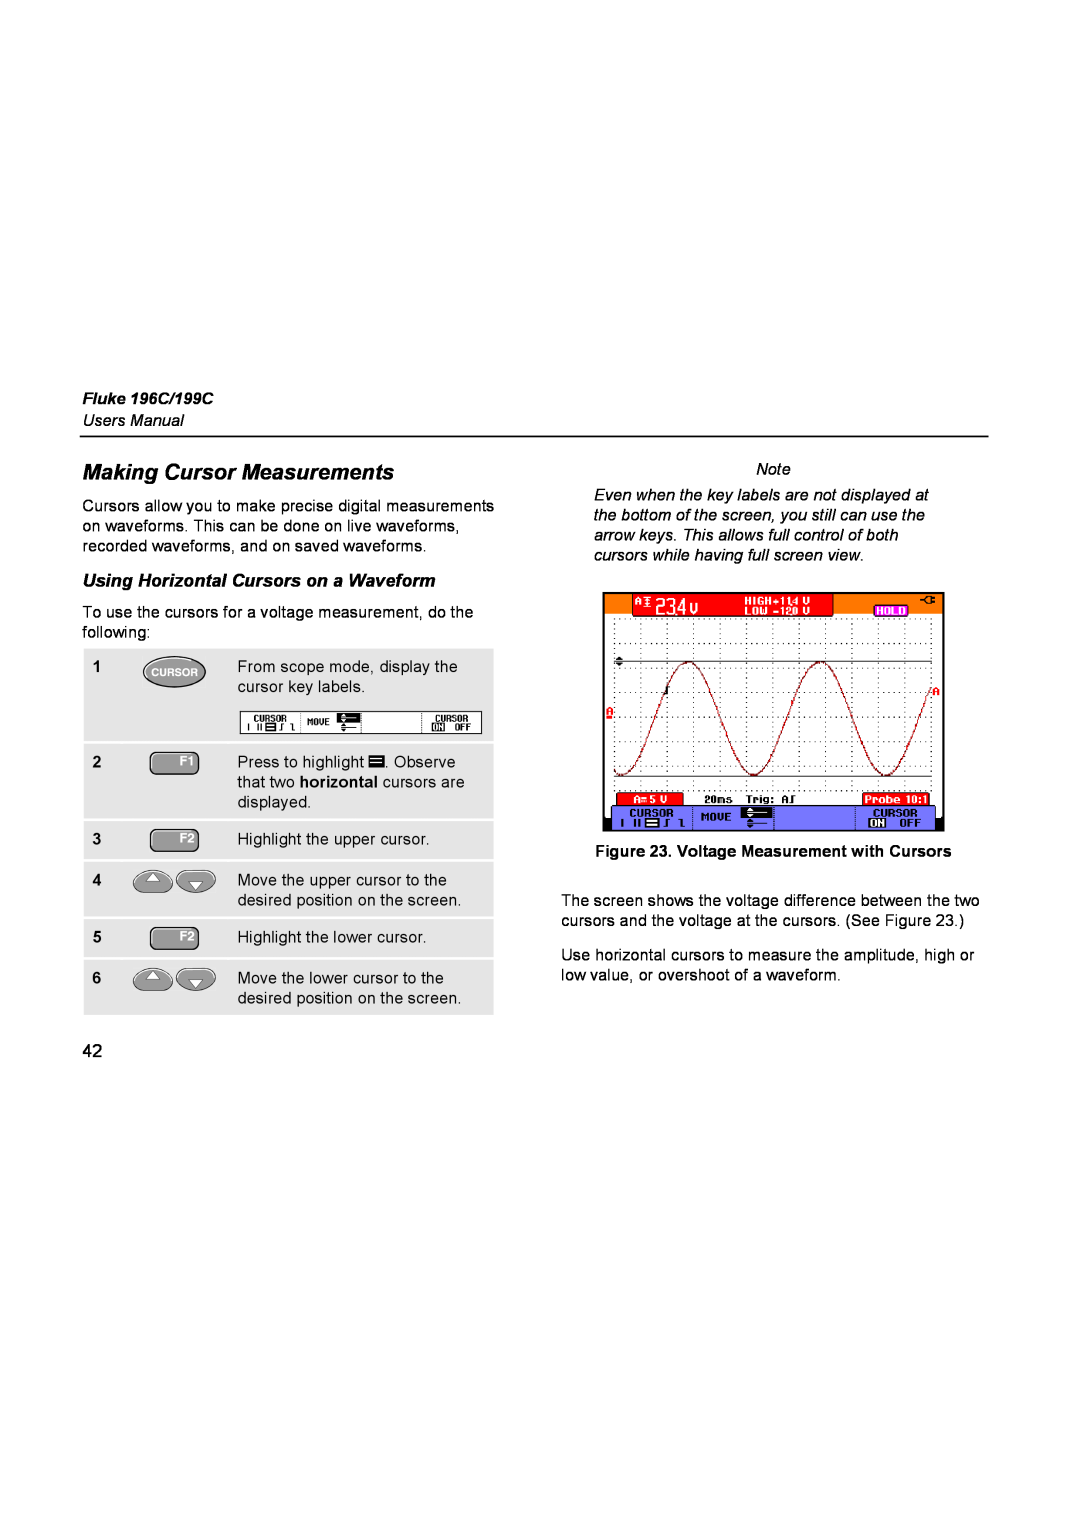 Fluke 196C user manual Making Cursor Measurements, Using Horizontal Cursors on a Waveform, Voltage Measurement with Cursors 